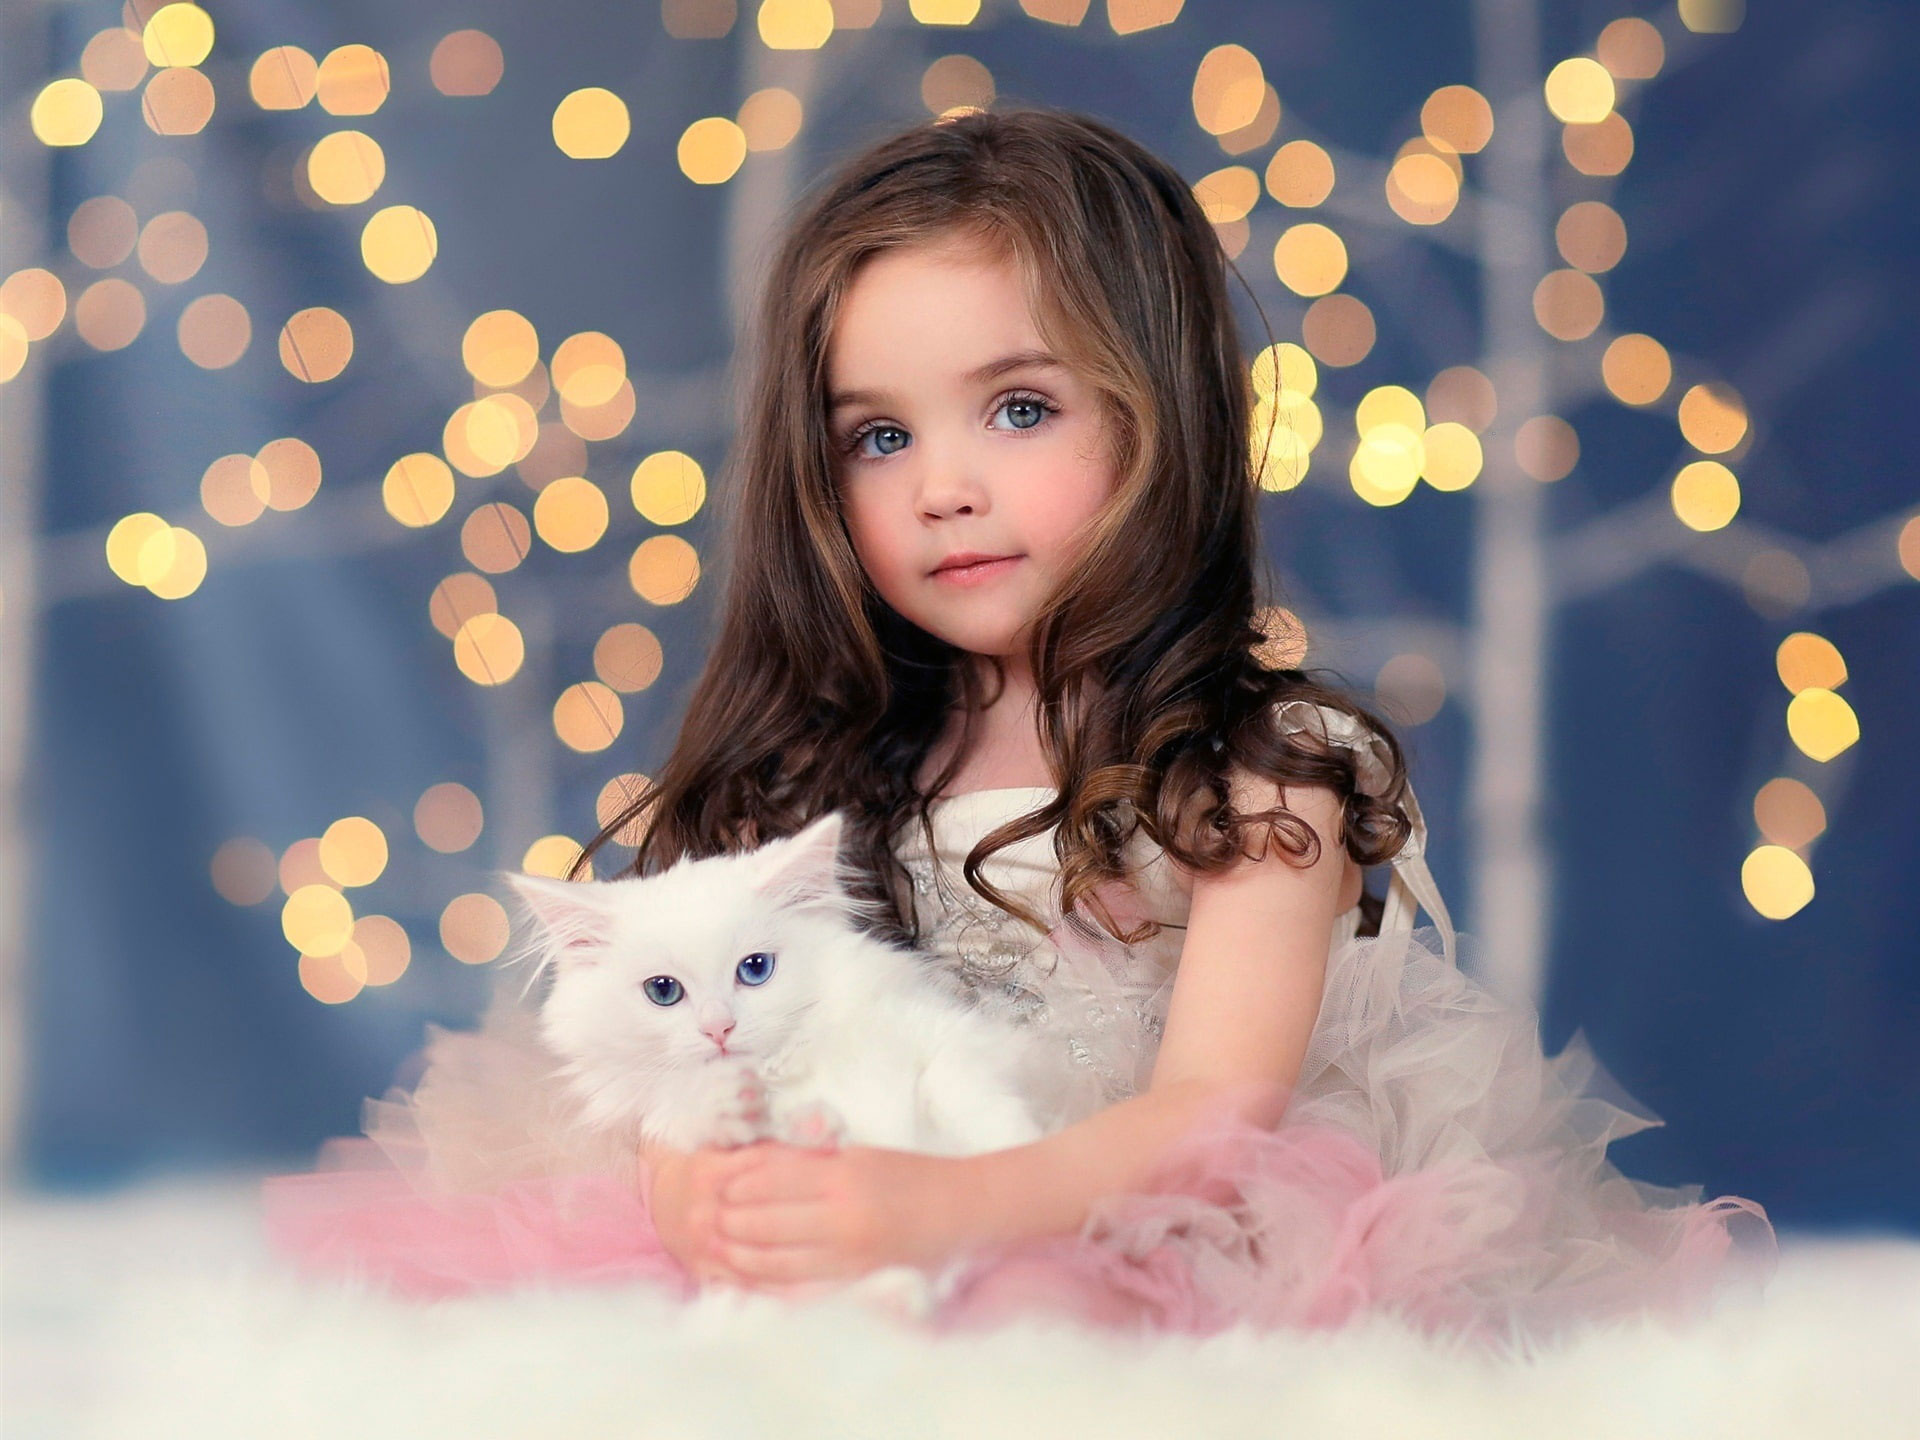 Wallpaper Cute Girl, White Kitten, Lights, Bokeh - Wallpaperforu